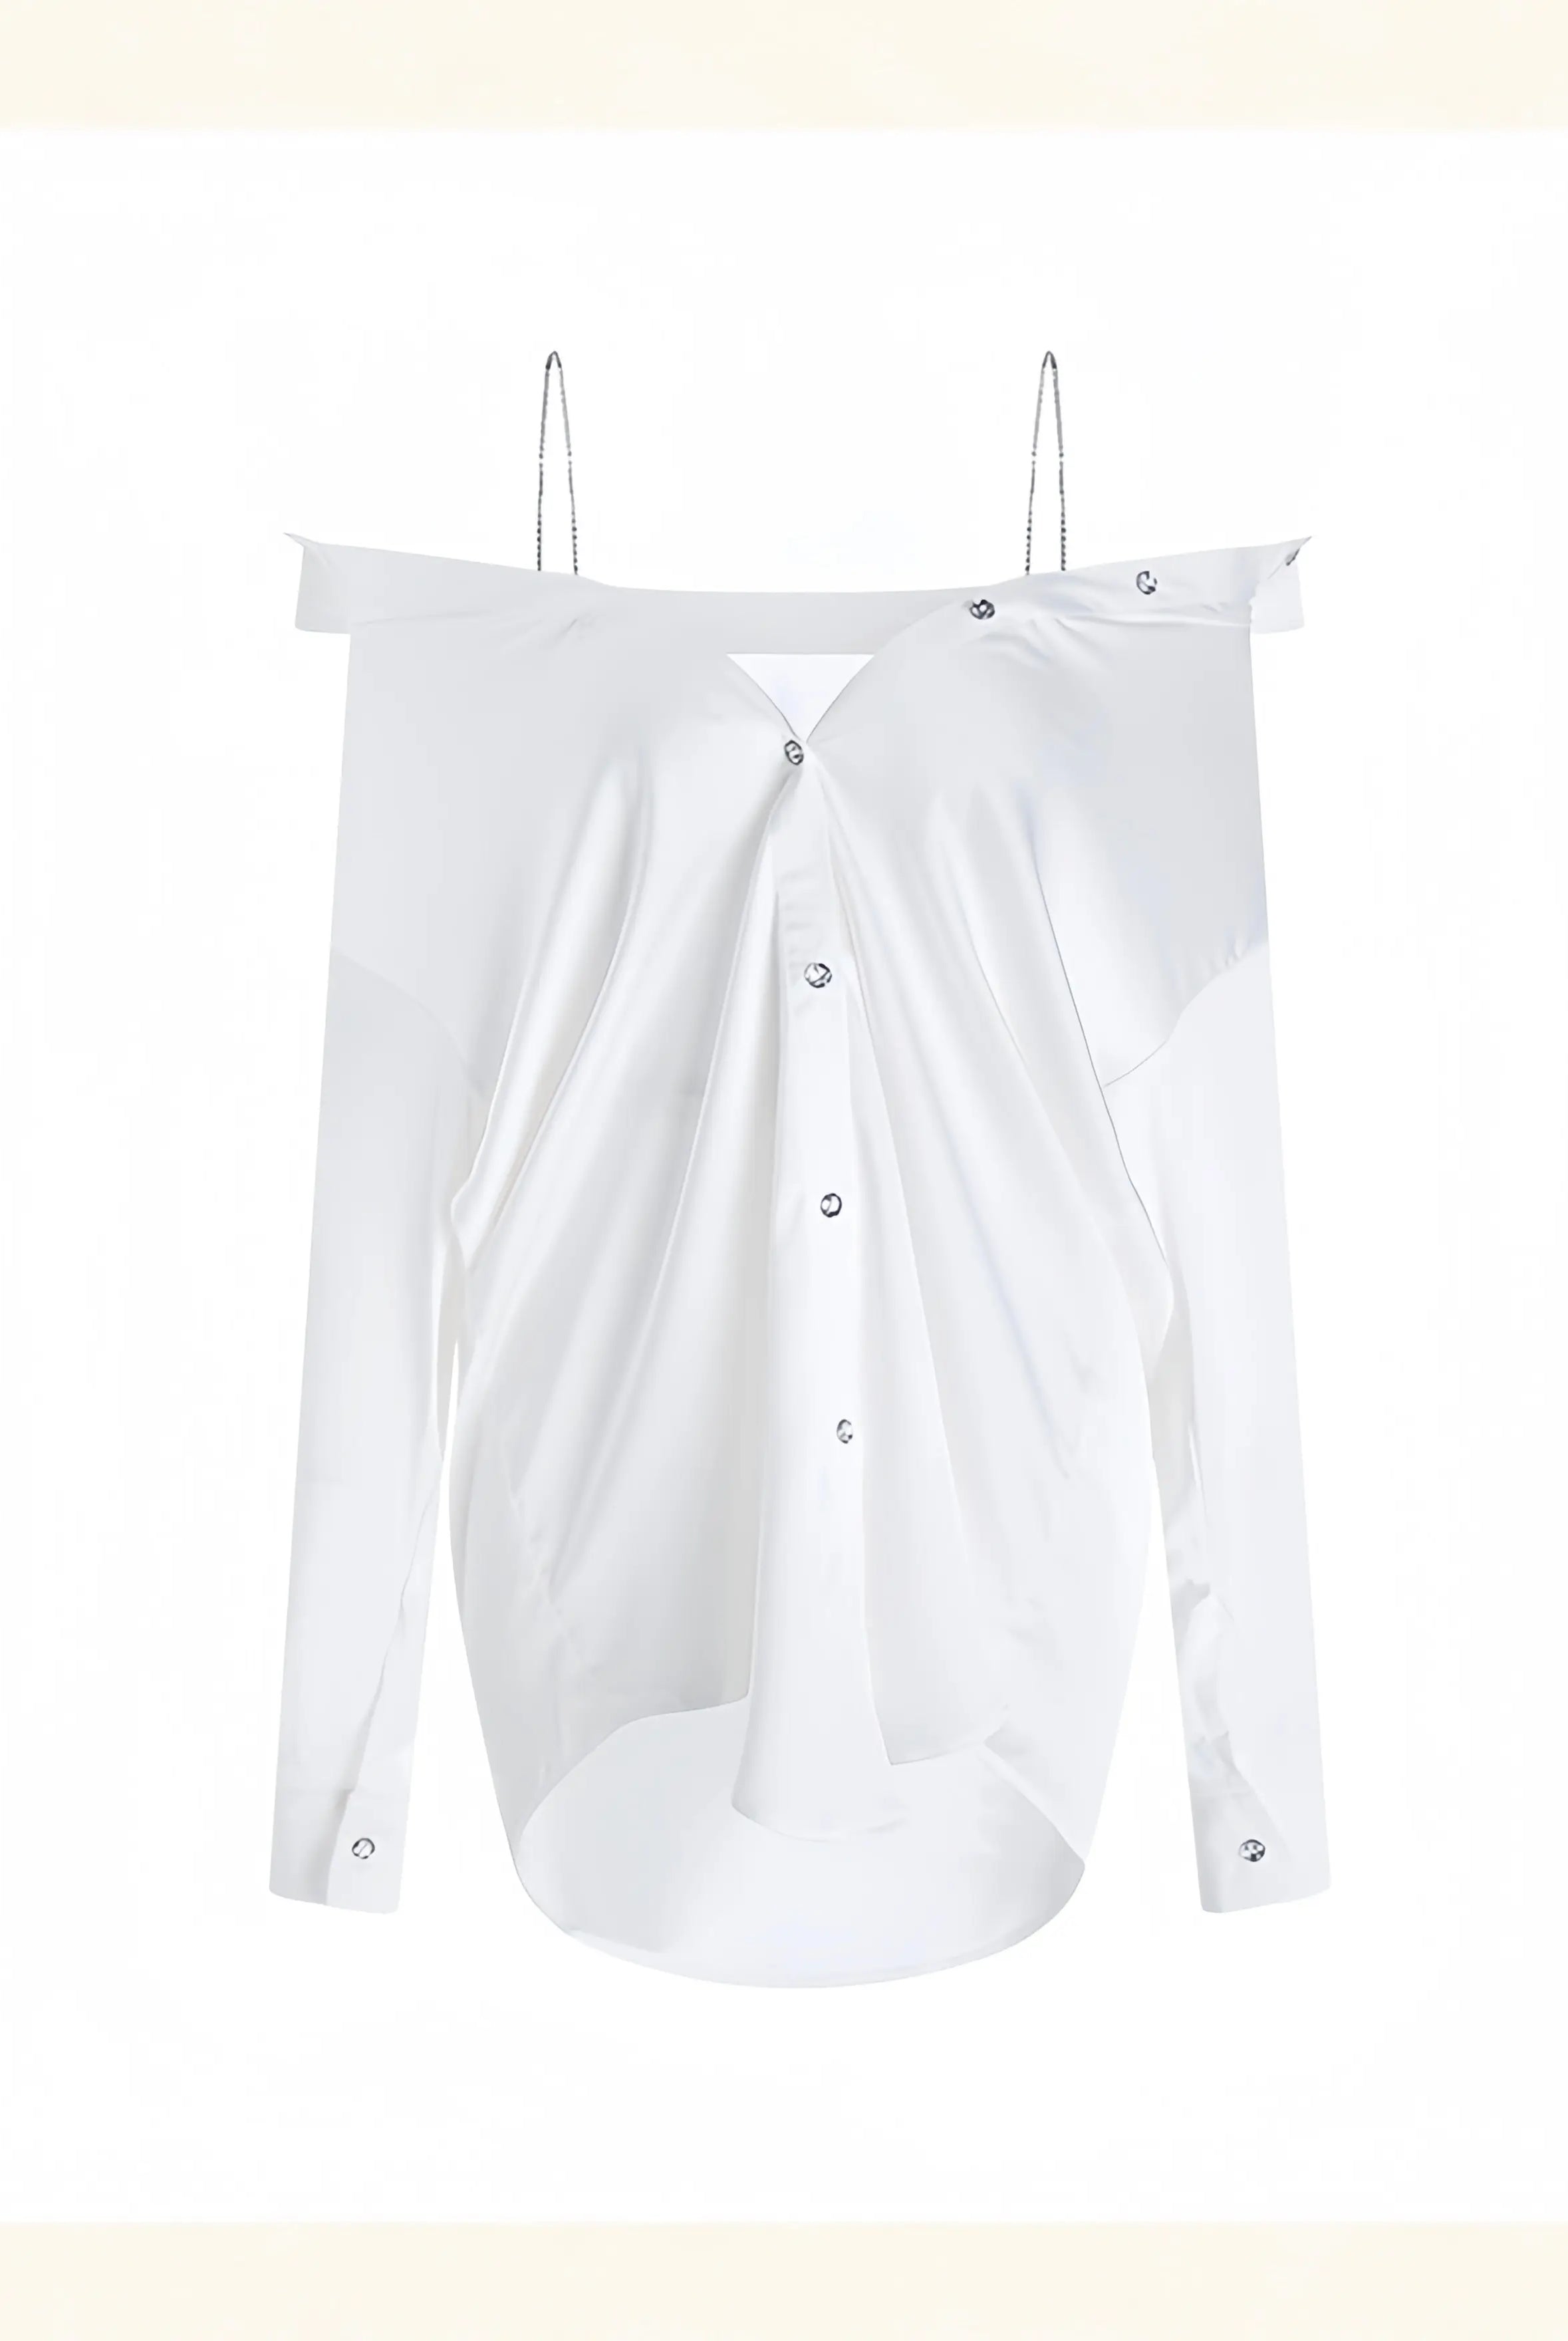 Sleek Satin Deep V-Neck Lingerie Shirt with Rhinestone Chain - Elegant Nightwear Set Peach Passion